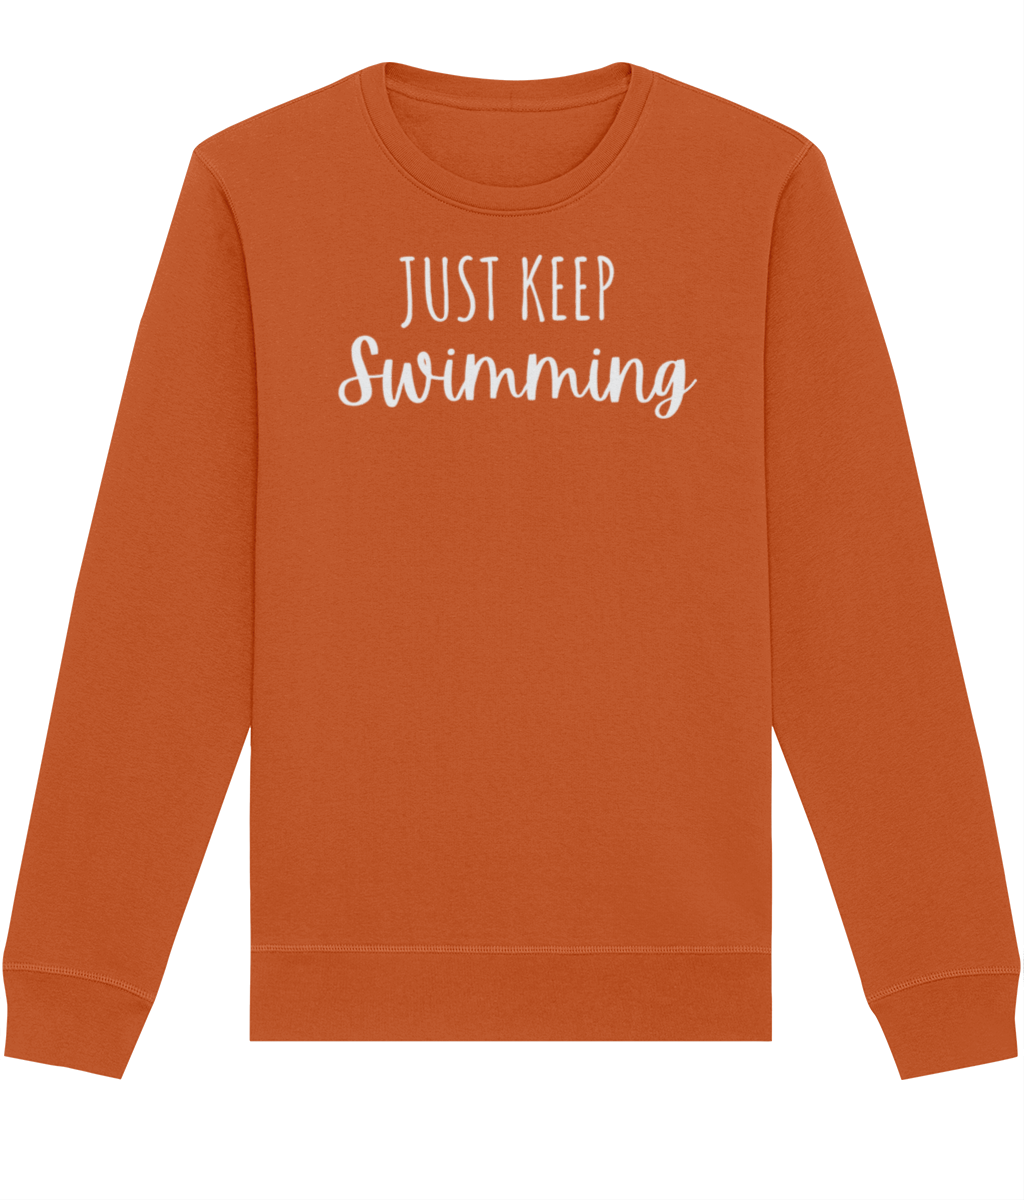 Just Keep Swimming Organic Cotton Sweatshirt